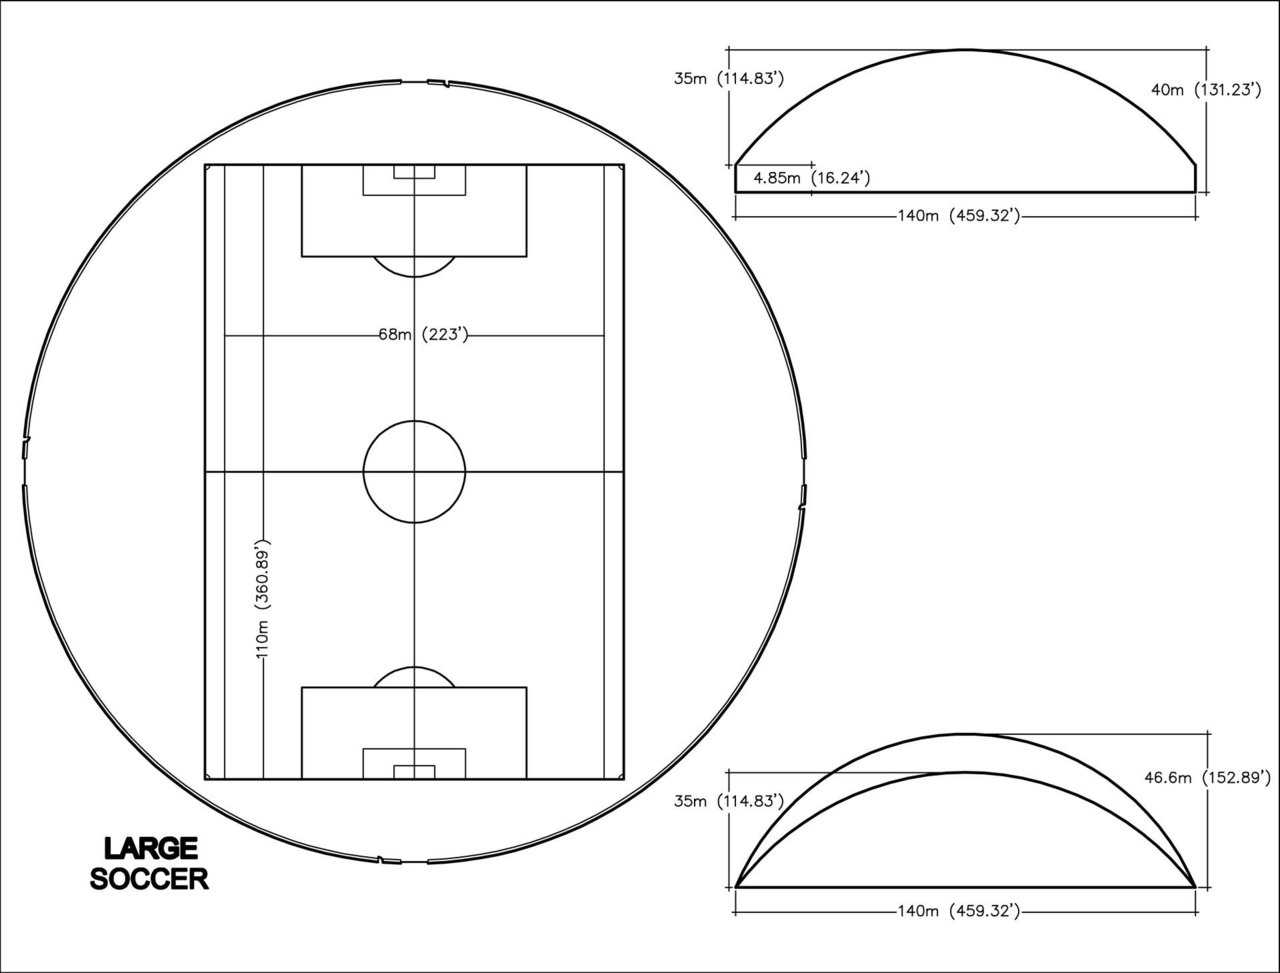 Large Soccer Practice Dome — 140m (460’ diameter)